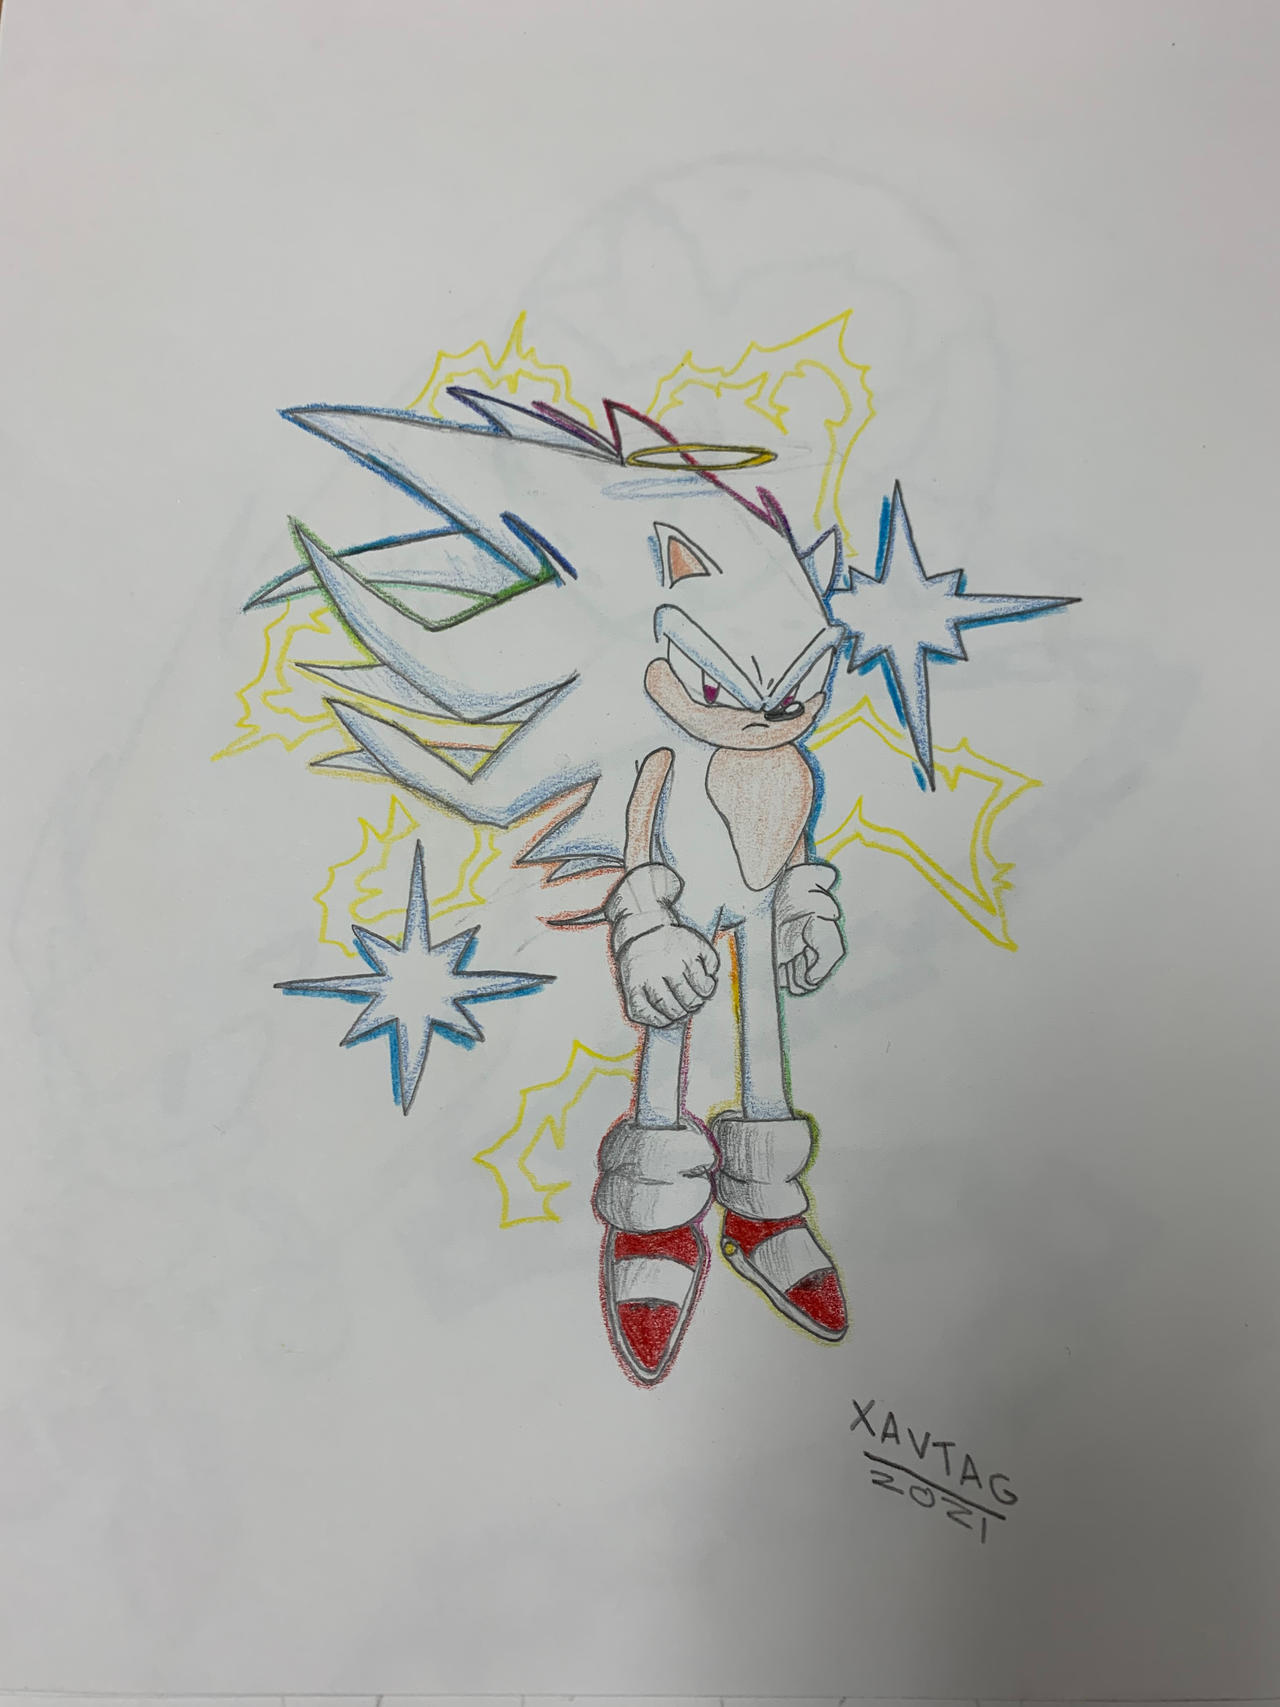 Super Sonic 3 by Kinoko269 on DeviantArt